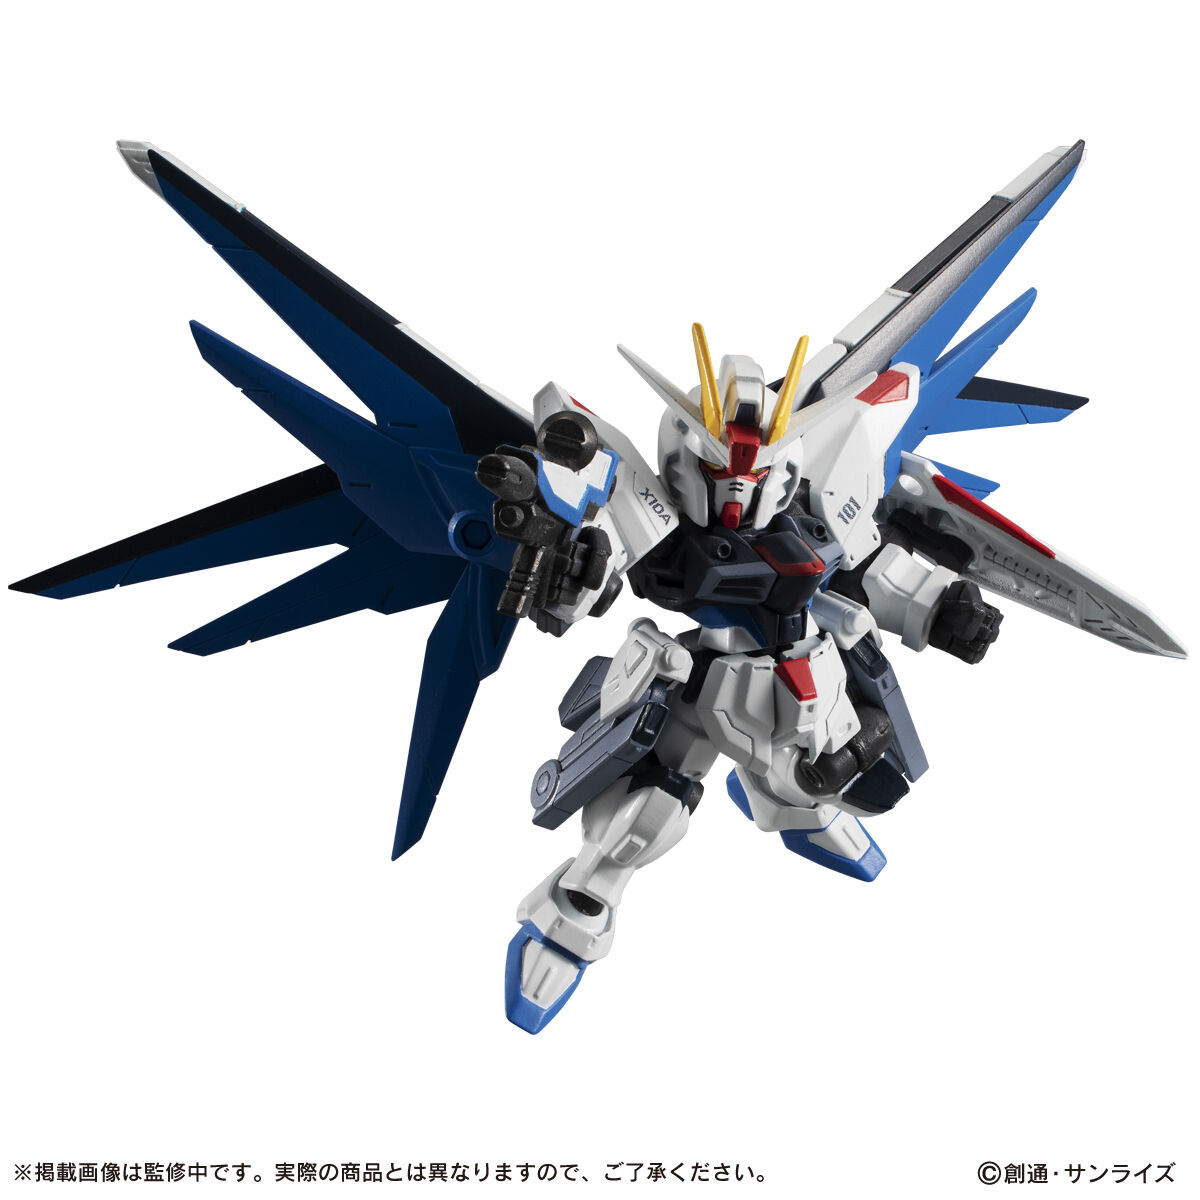 Gashapon Gundam Series: Gundam Mobile Suit Ensemble EX14A ZGMF-X10A Freedom Gundam